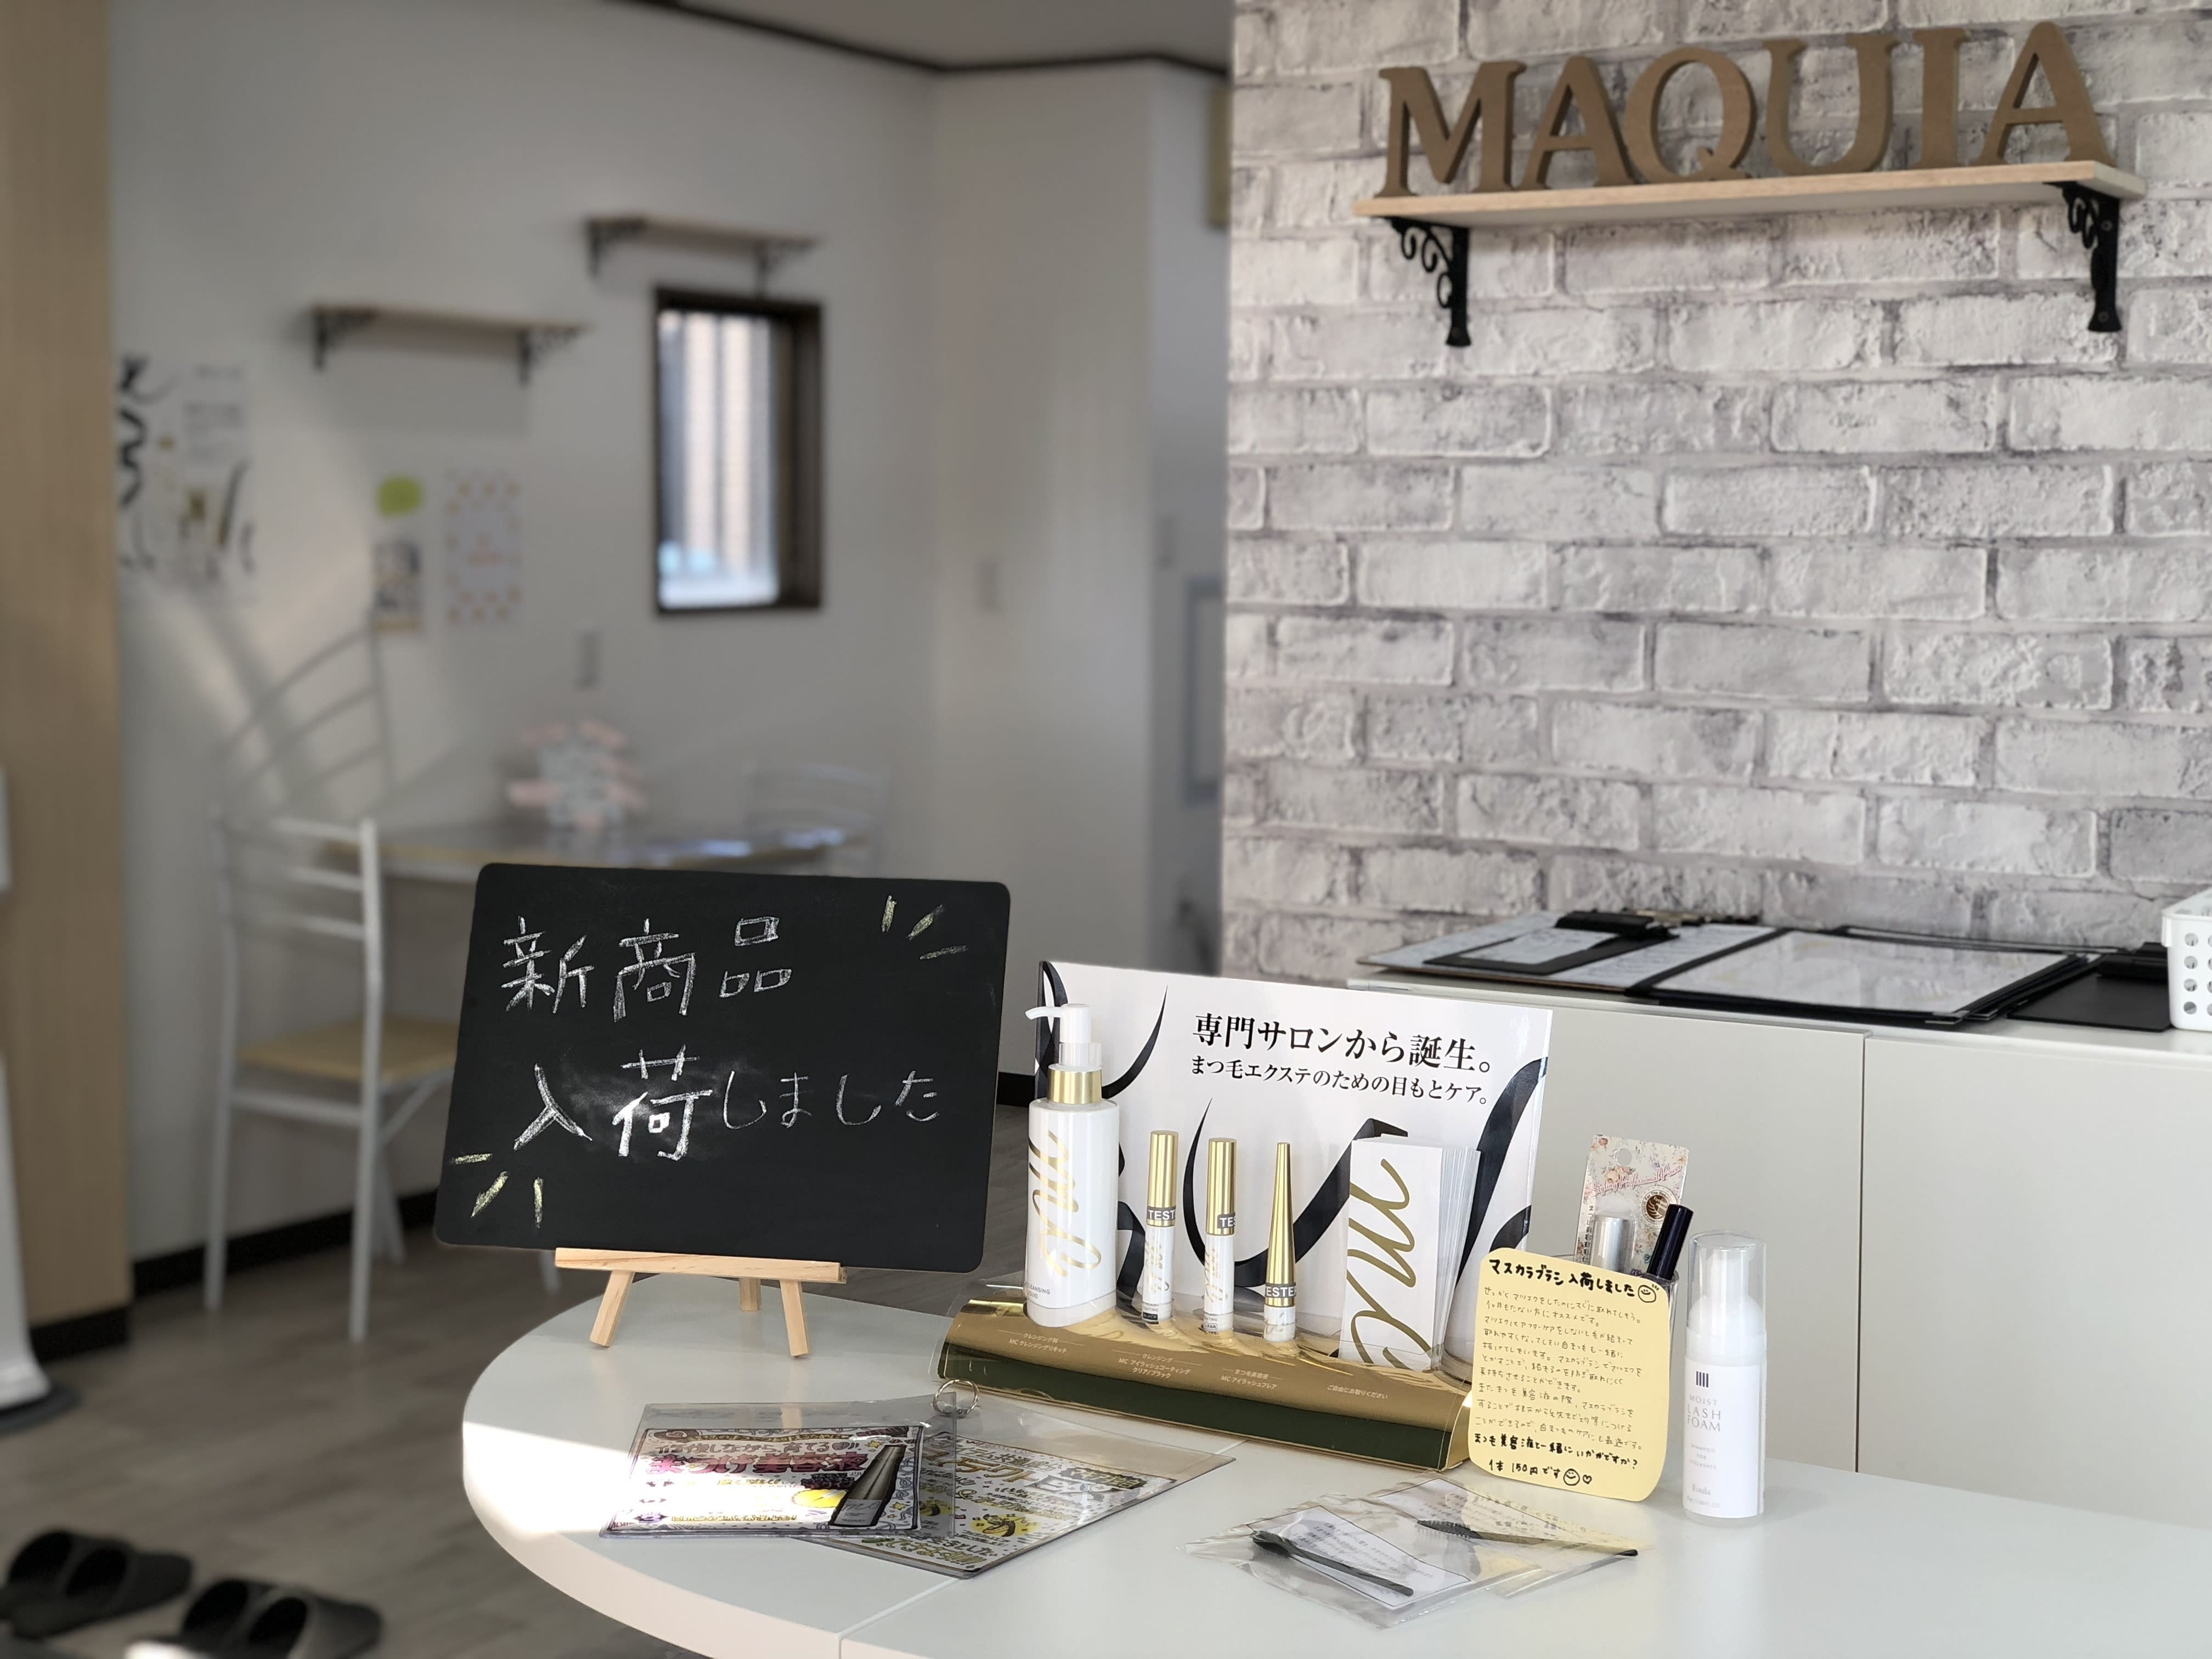 MAQUIA 奈良橿原店のアイキャッチ画像